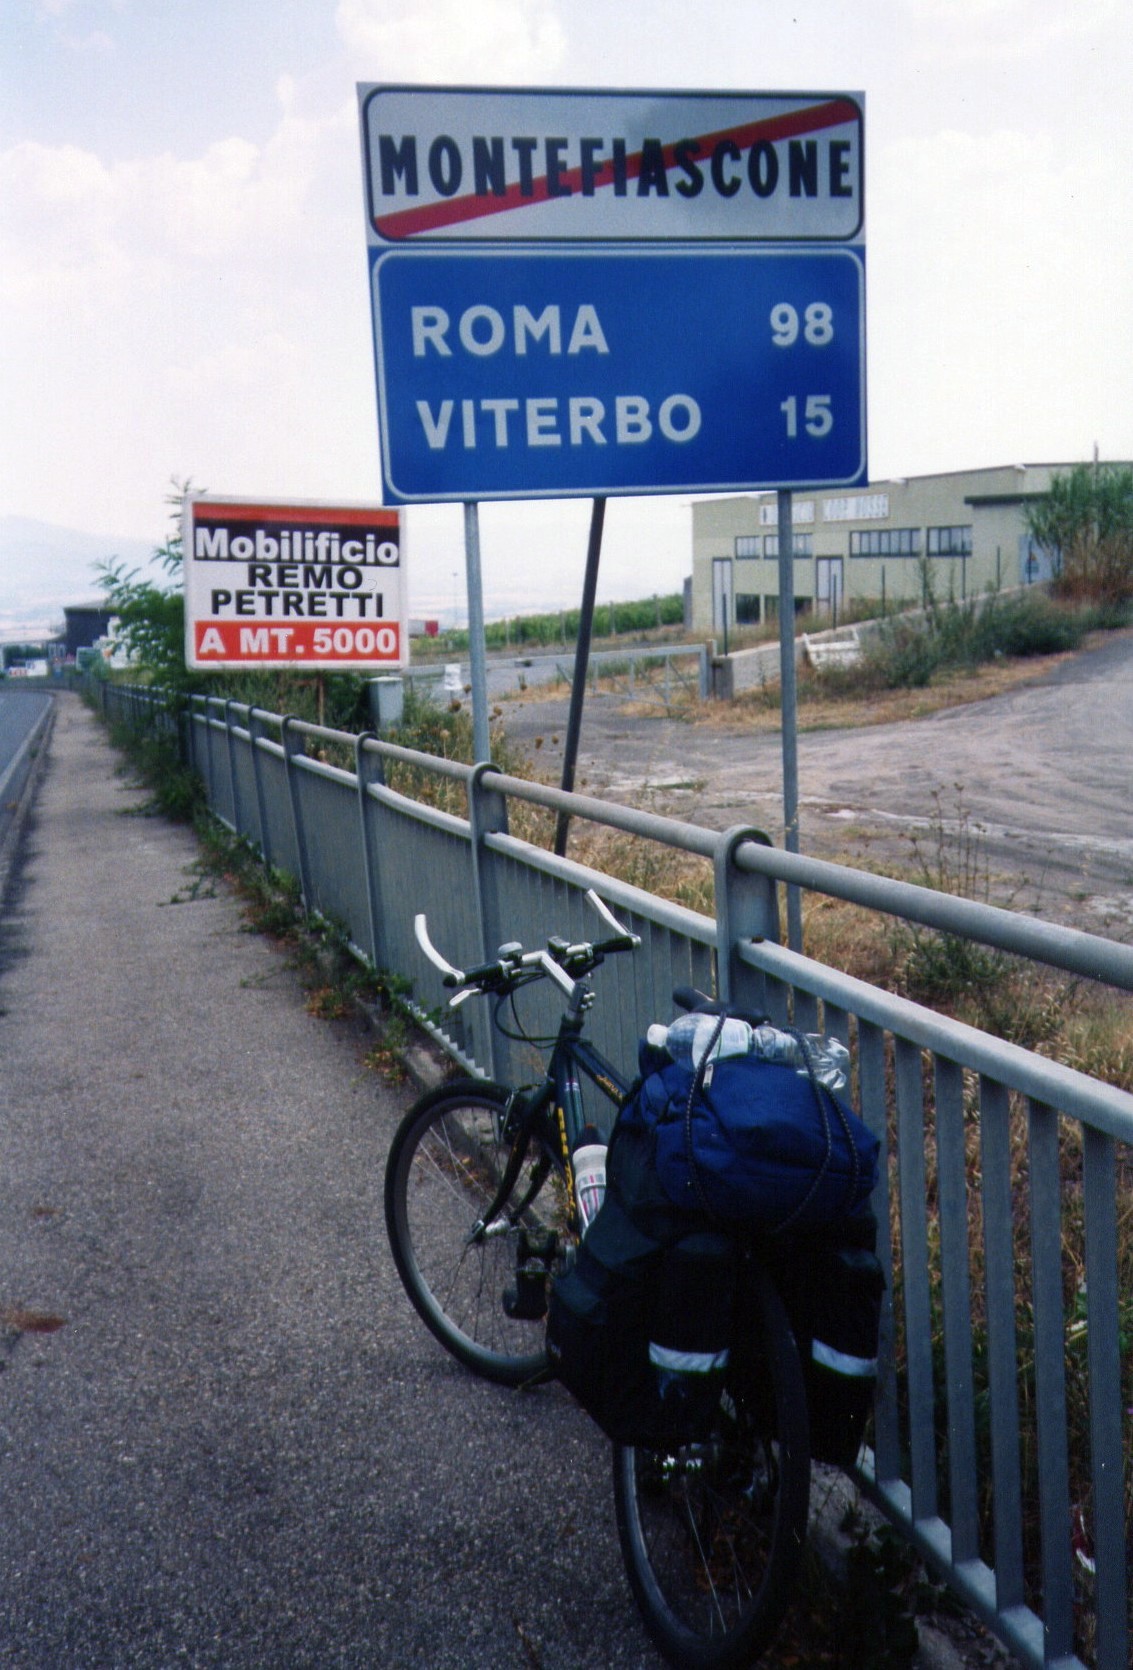 ¡Menos de 100 km hasta Roma!